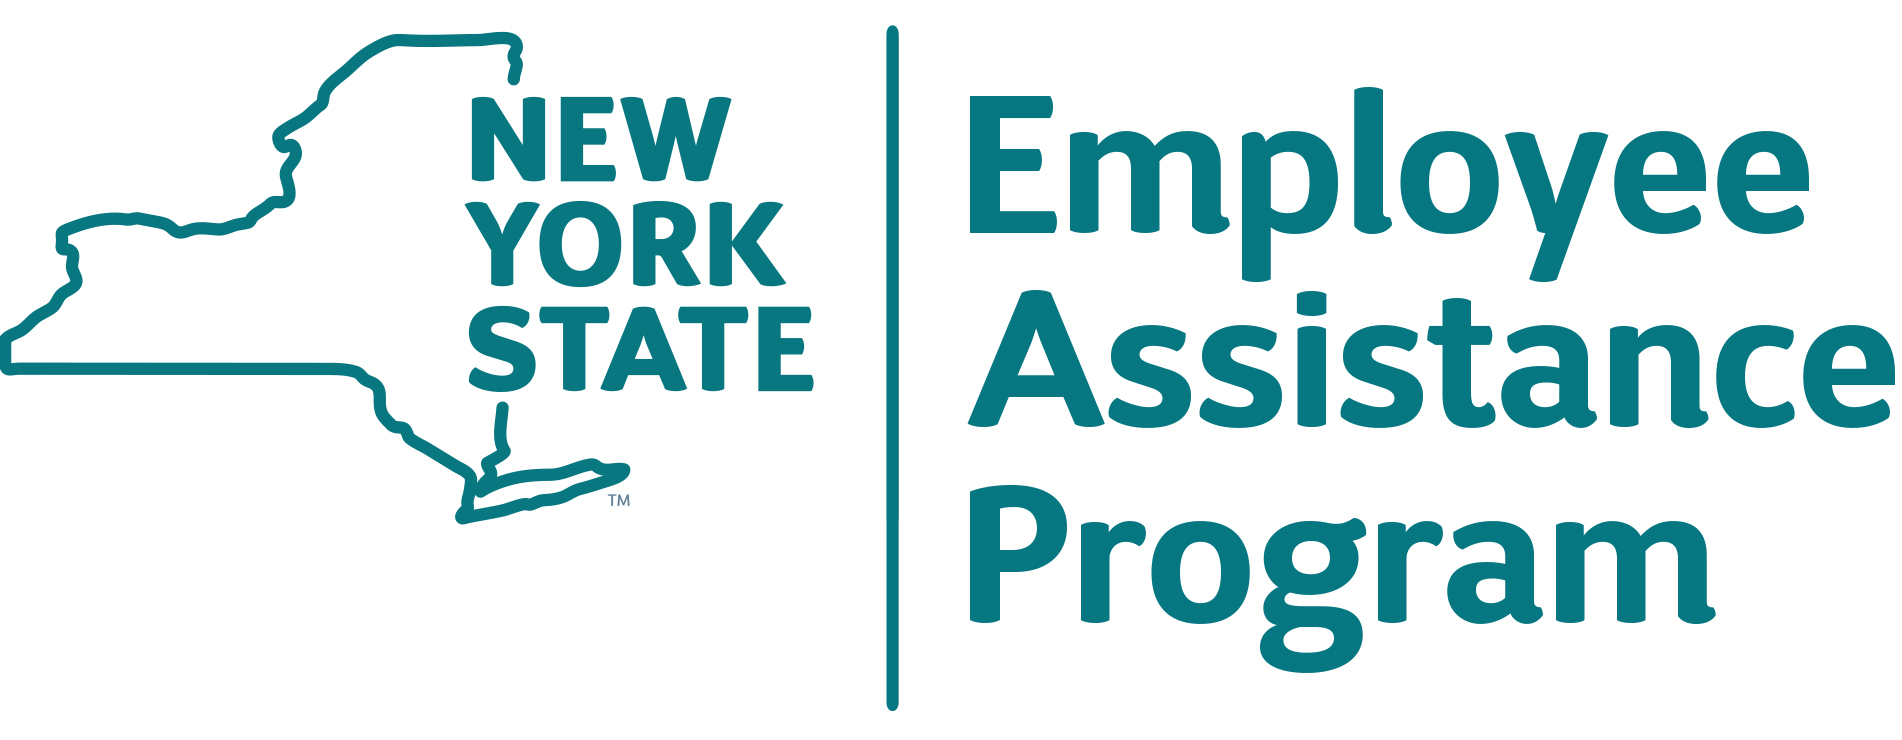 NY State Employee Assistance Program (EAP_